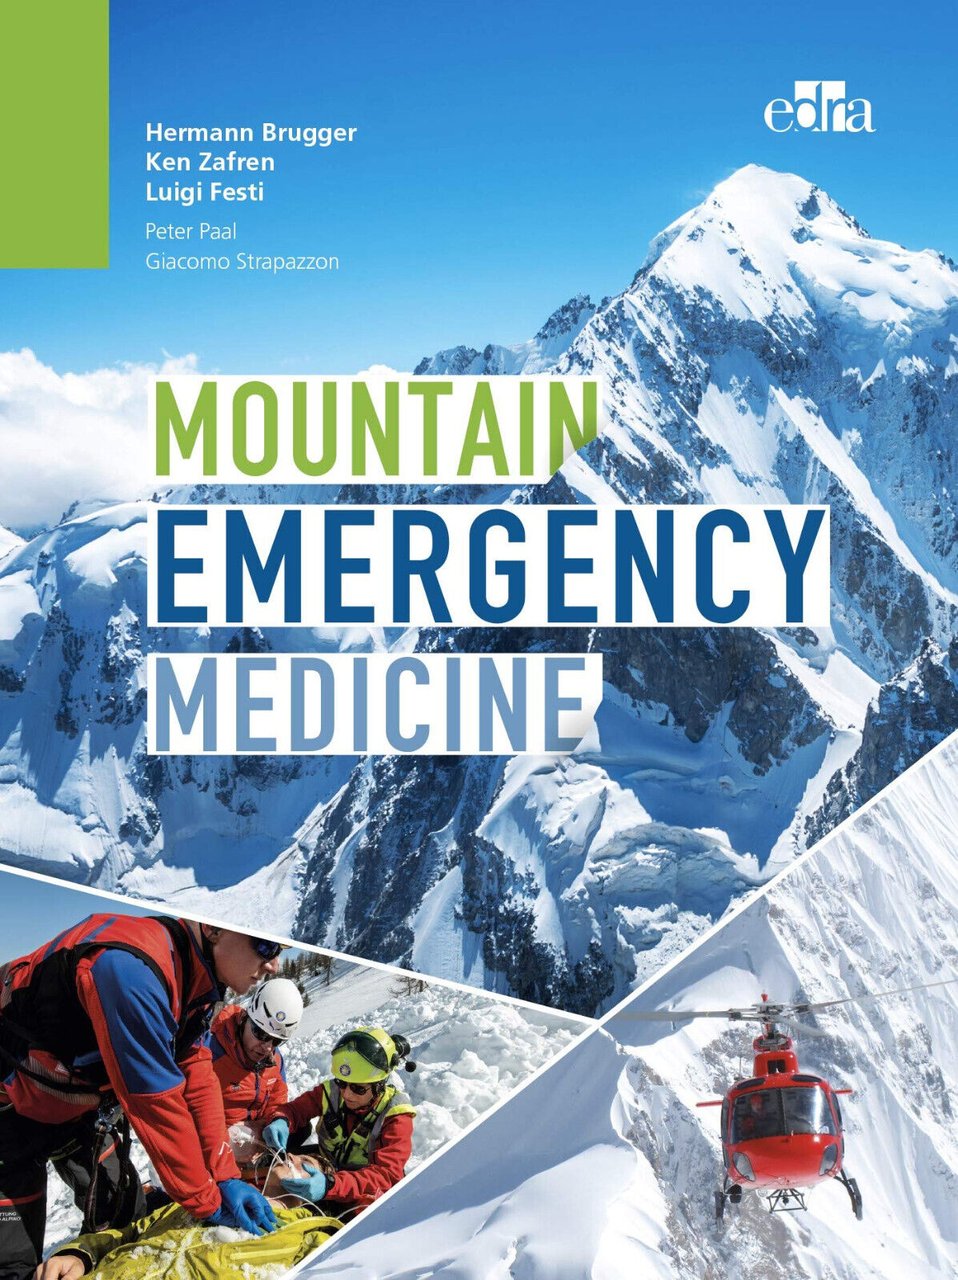 Mountain emergency medicine - Hermann Brugger, Ken Zafren, Luigi Festi-EDRA,2021